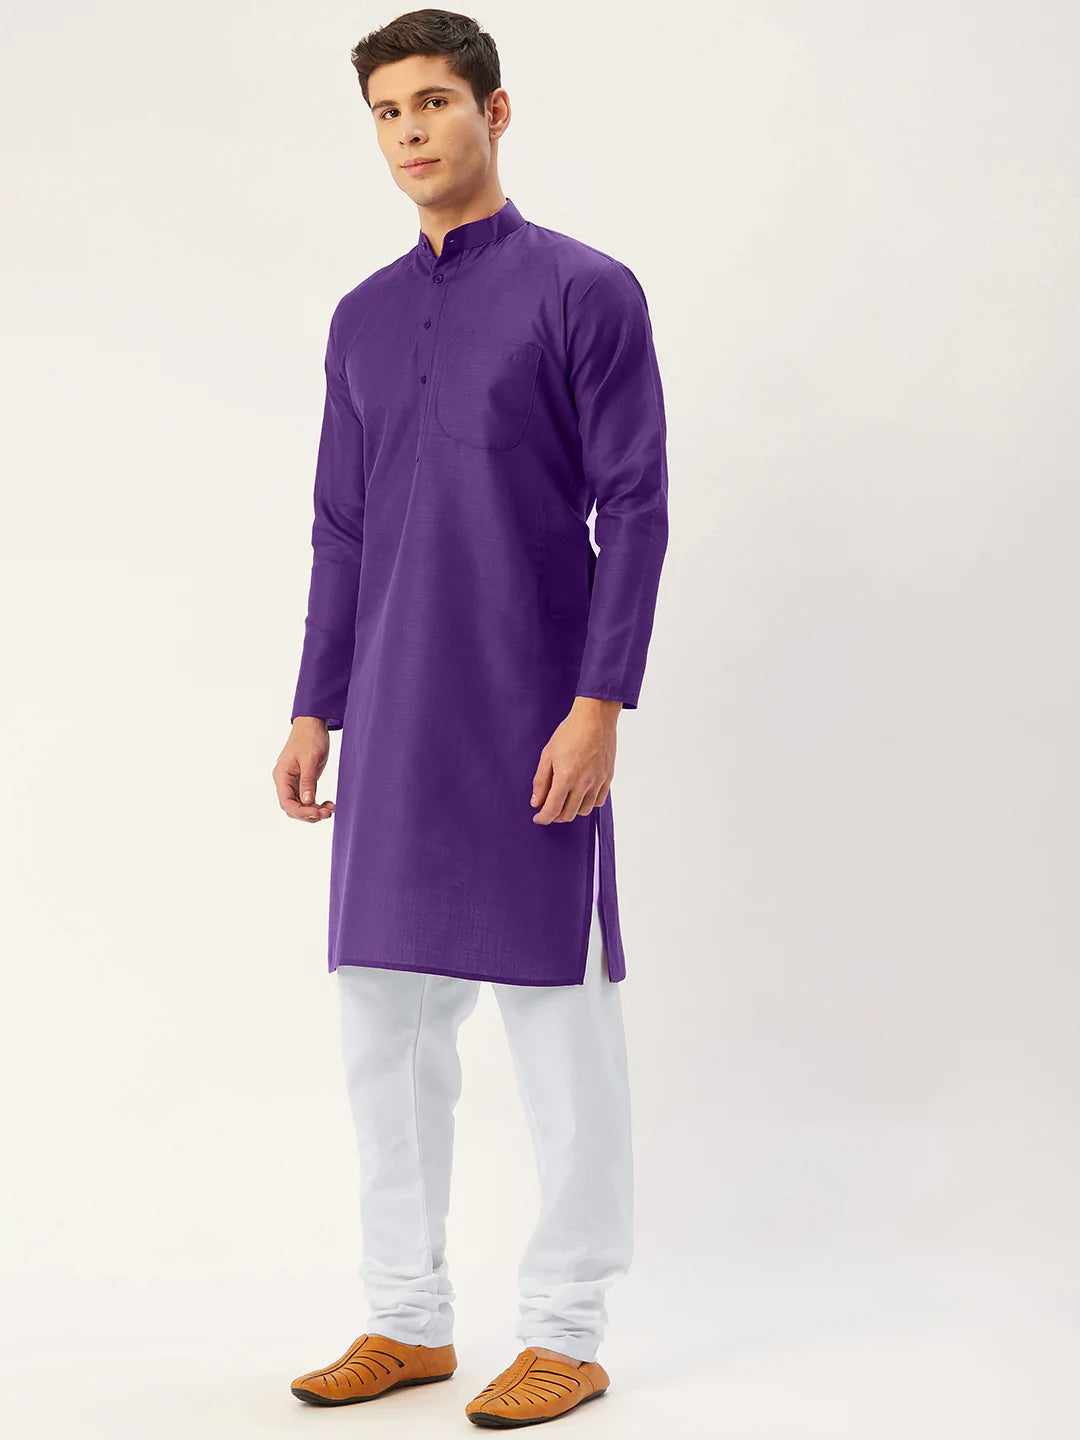 Jompers Men's Purple Cotton Solid Kurta Pyjama ( JOKP 611 Purple )